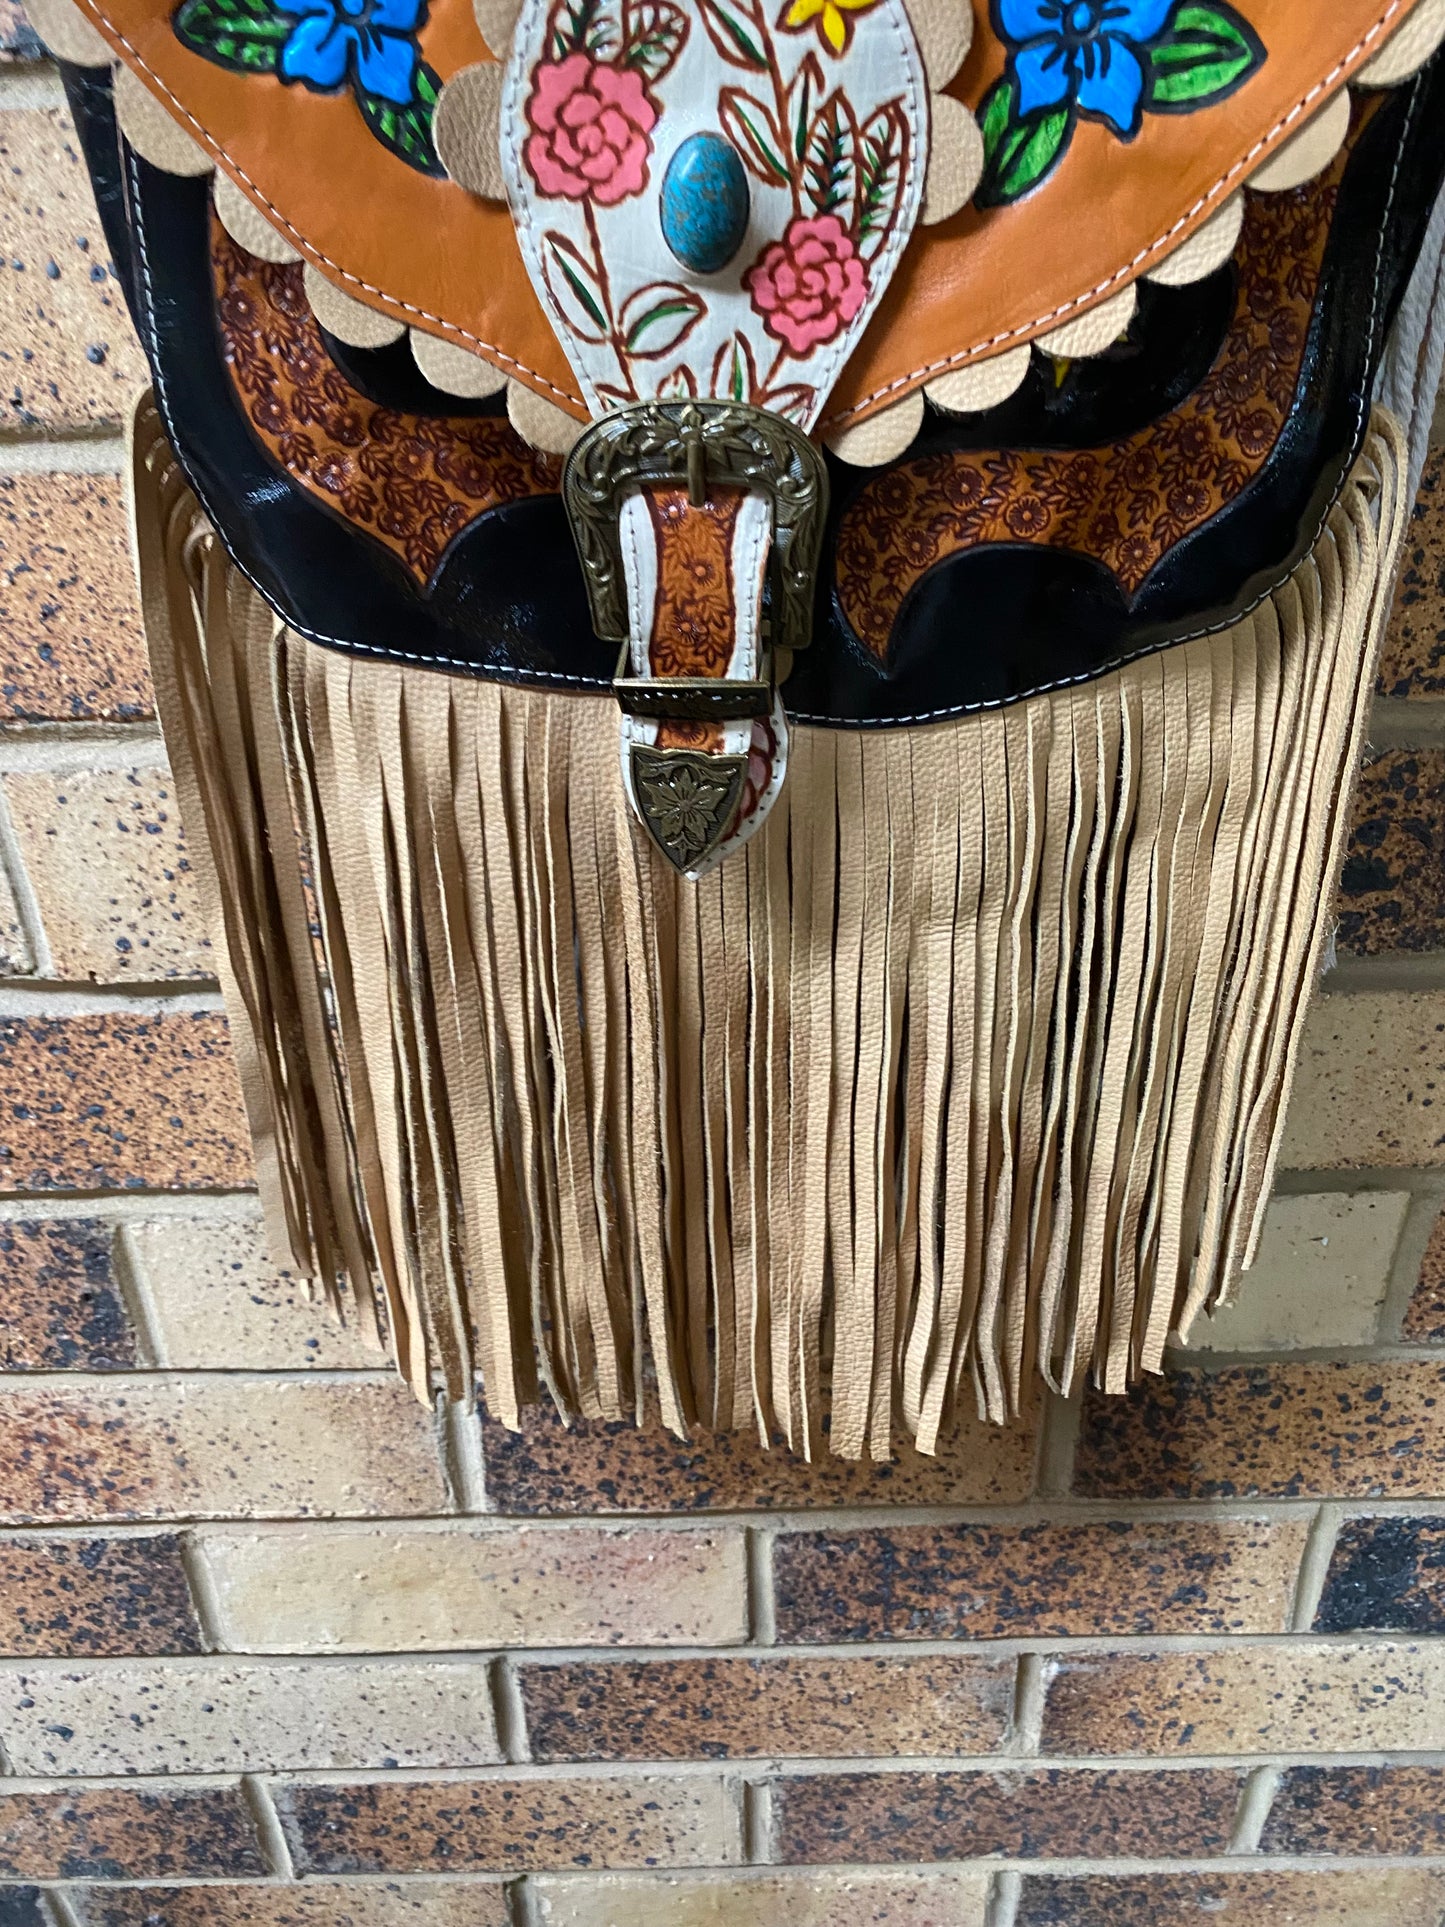 Bohemian Leather Shoulder Bag Gypsy